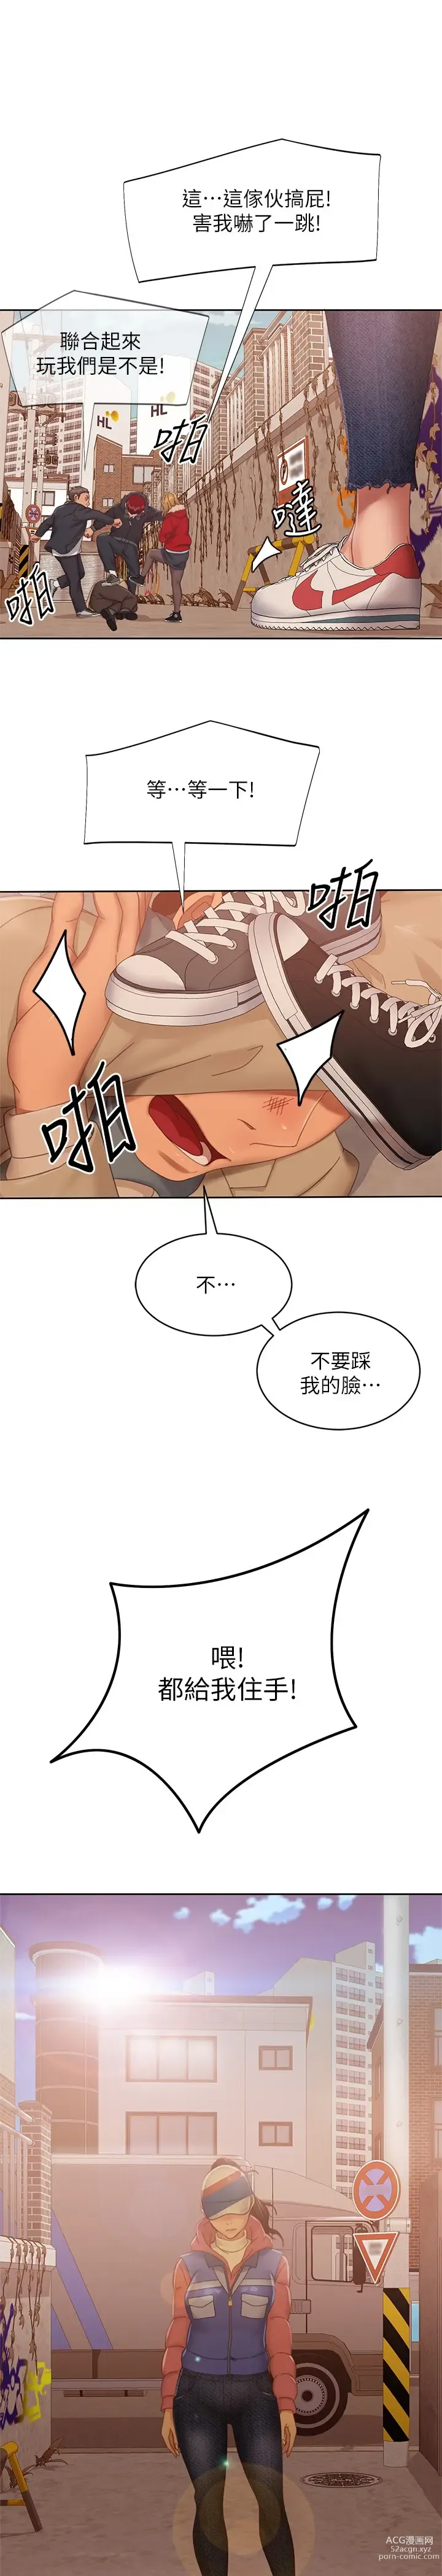 Page 1417 of manga 不良女房客 41-80